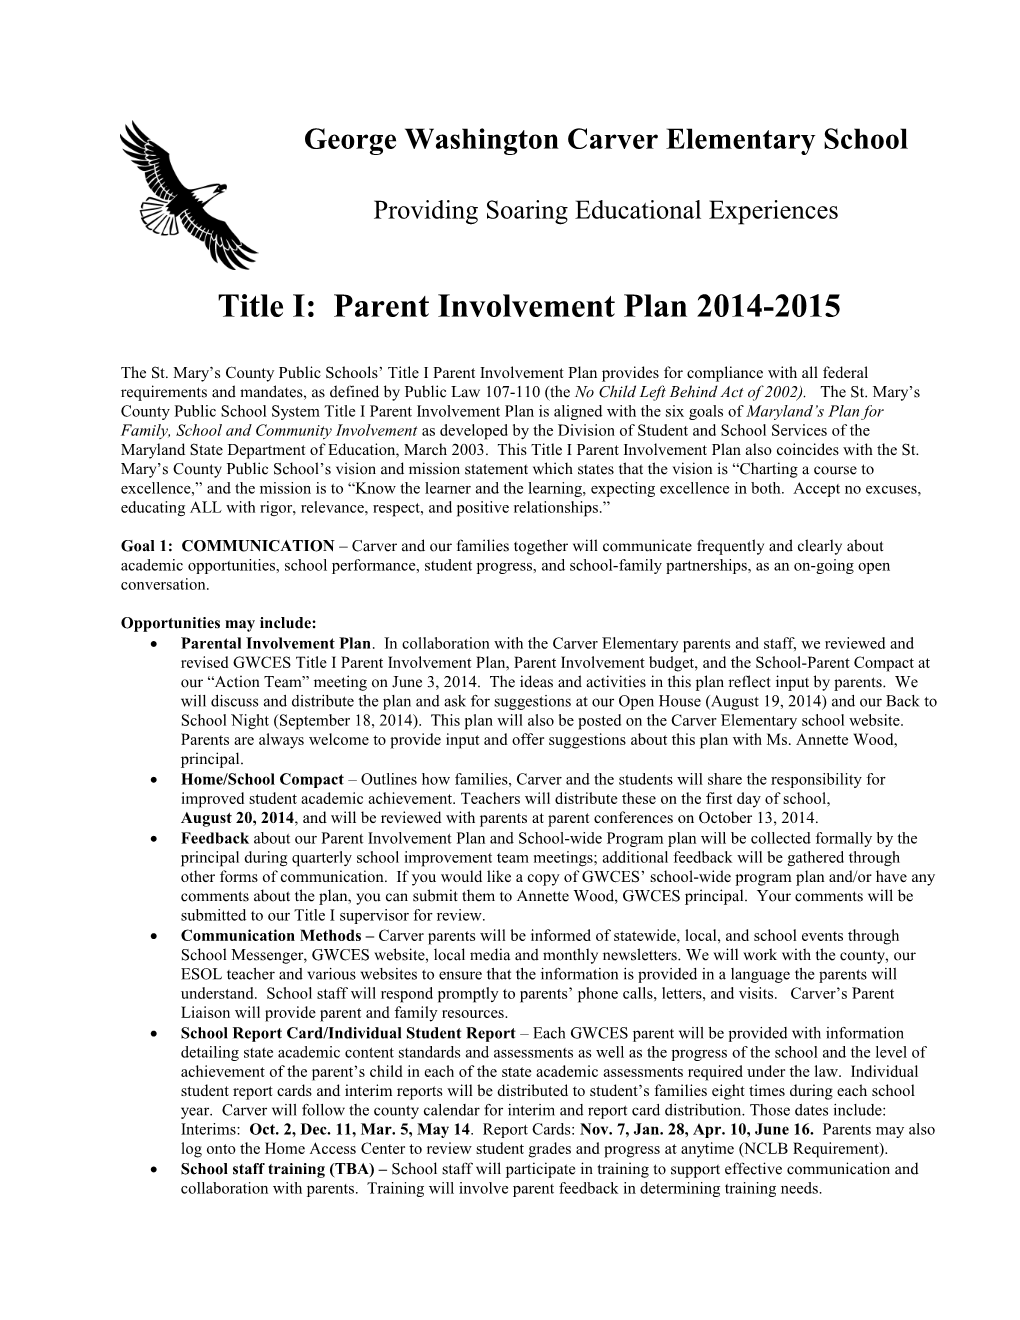 Title I: Parent Involvement Plan 2014-2015